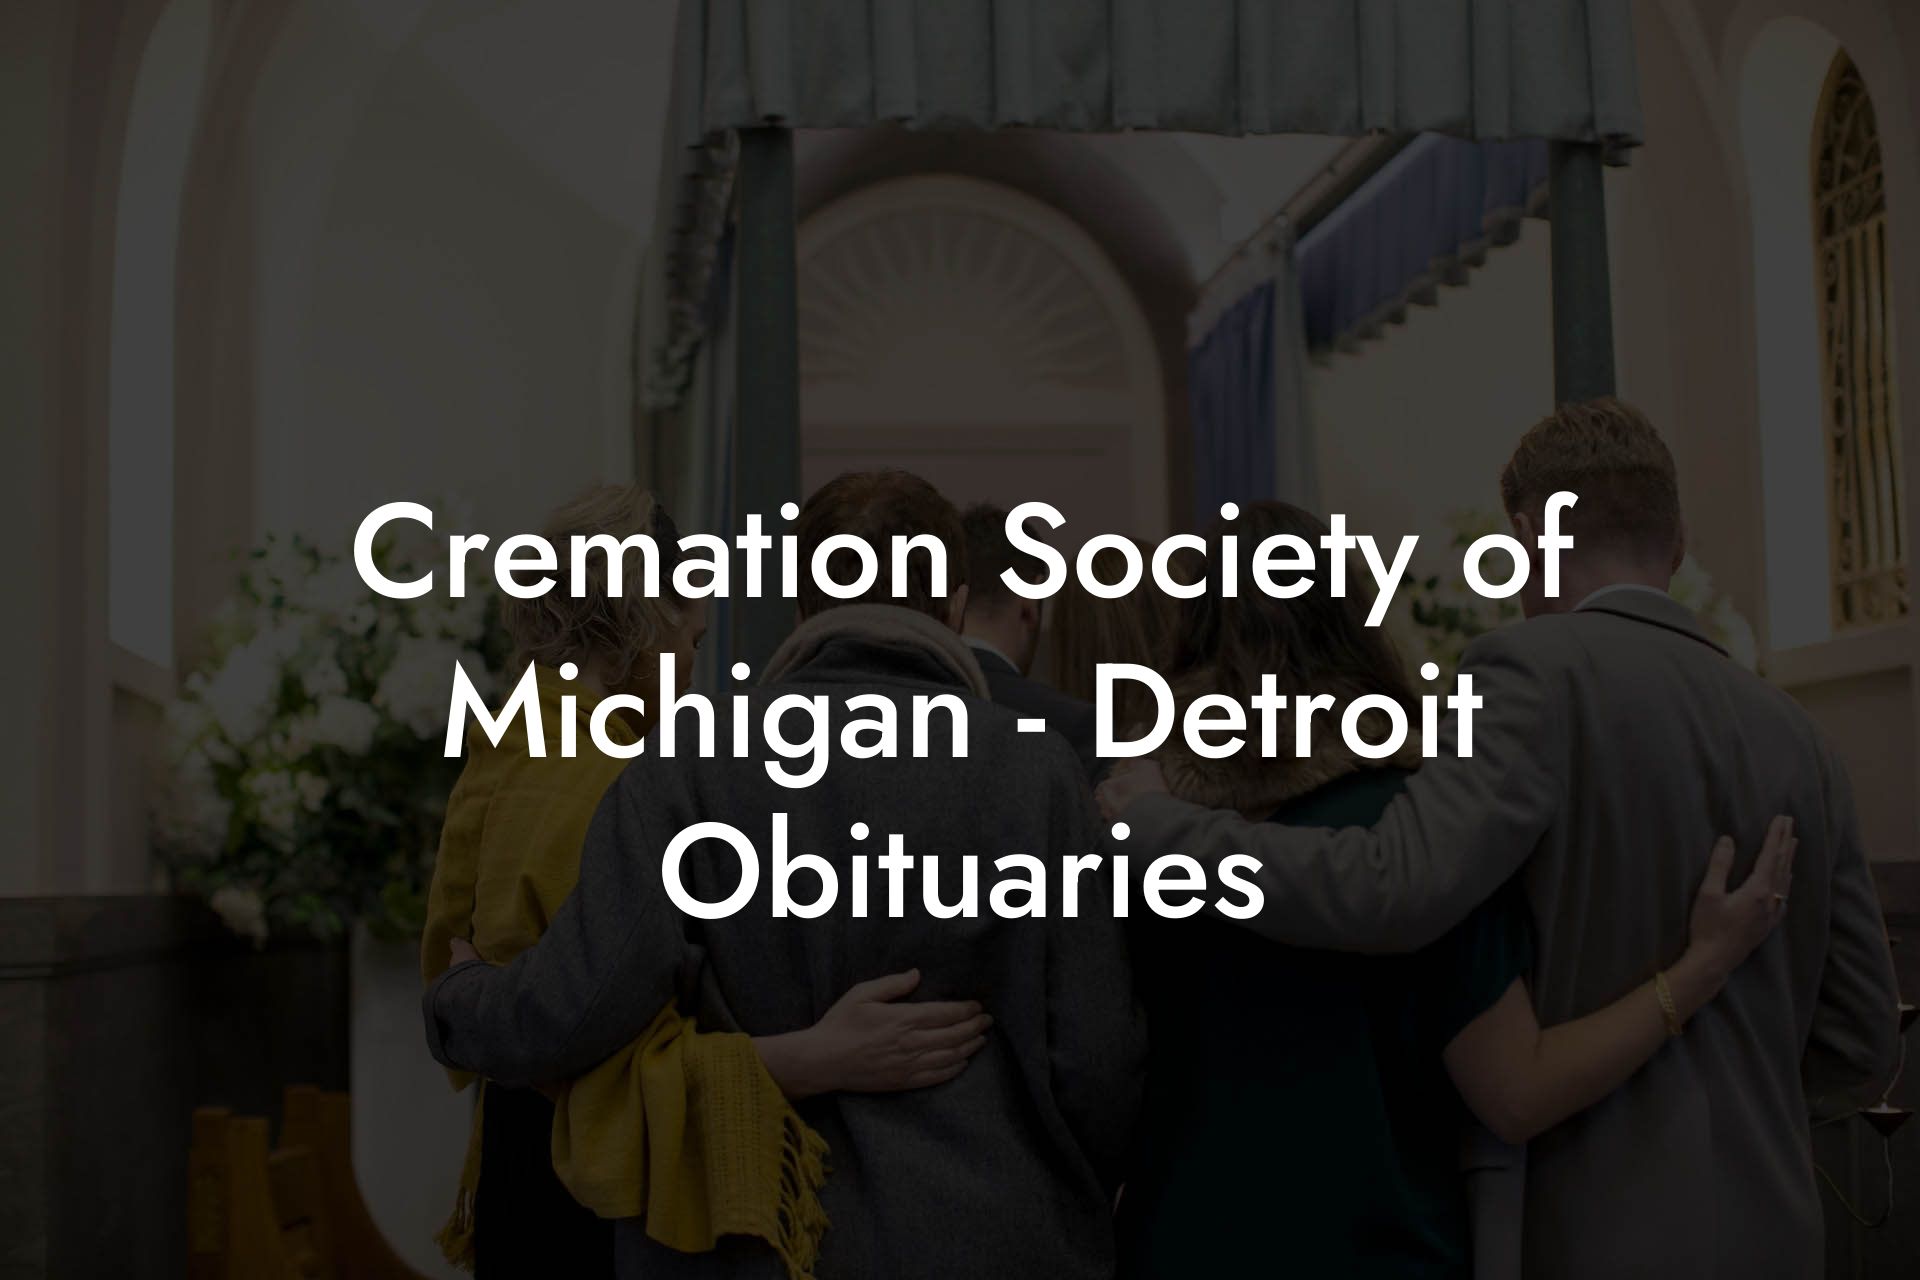 Cremation Society of Michigan - Detroit Obituaries